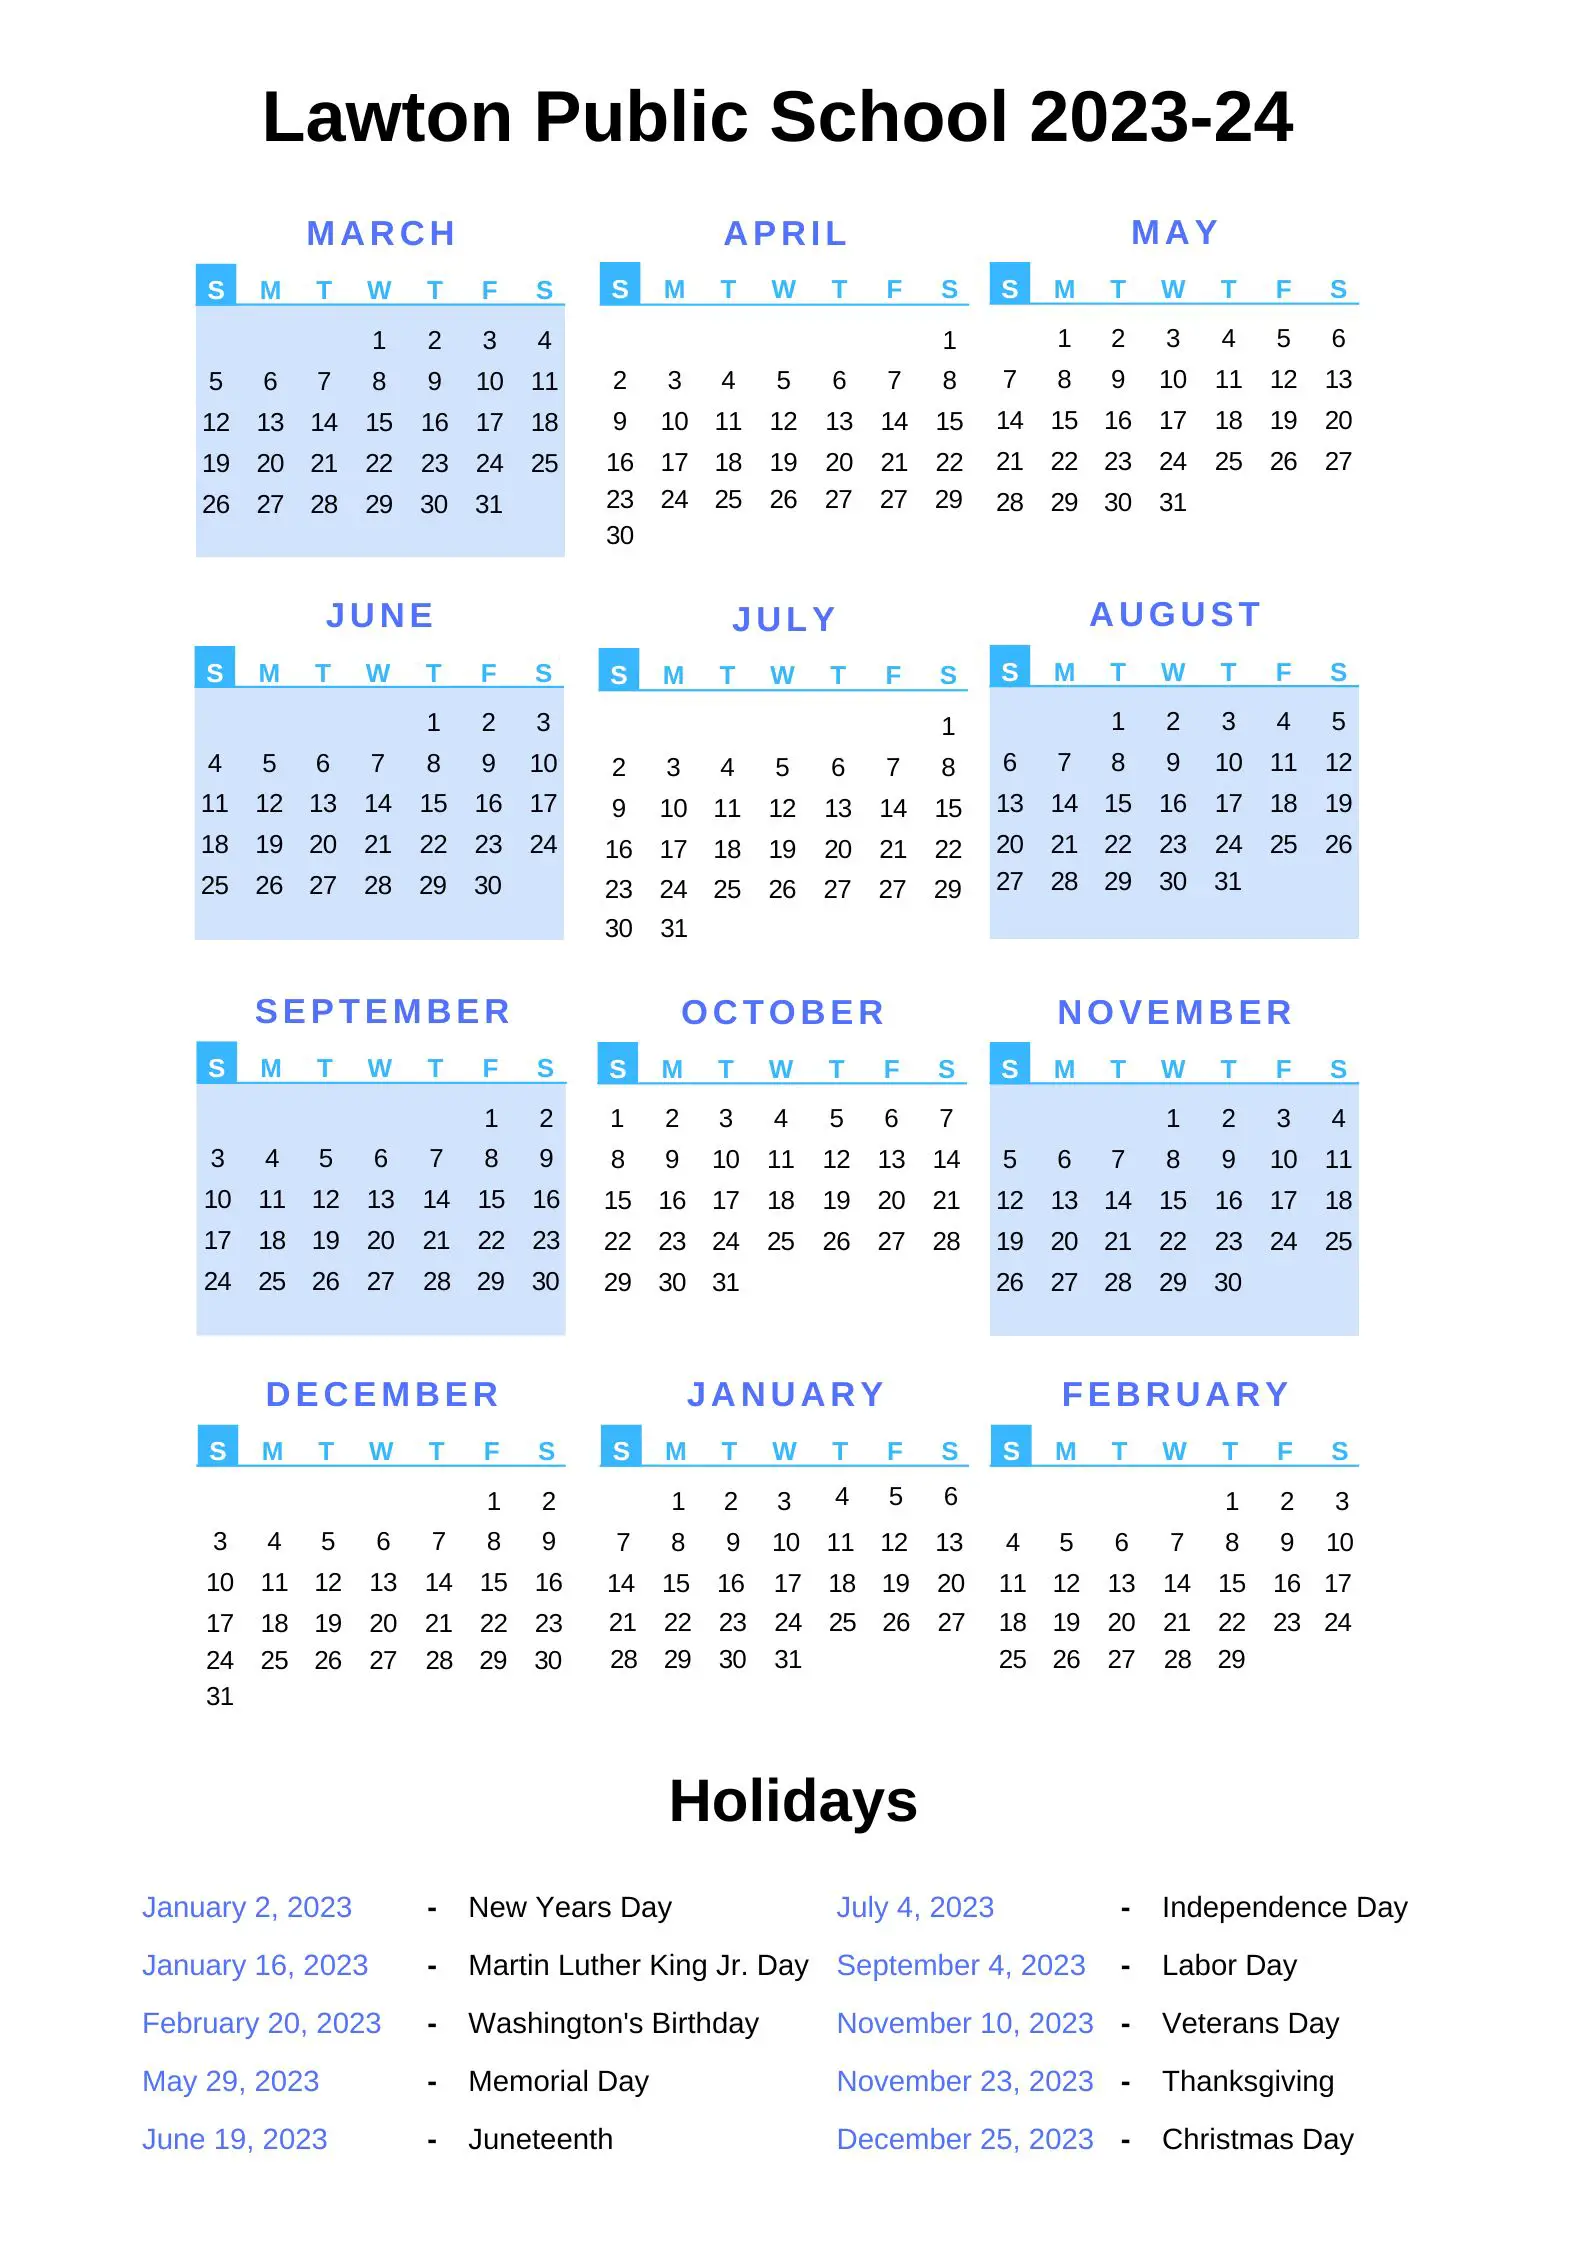 Lawton Public Schools Calendar 202324 With Holidays